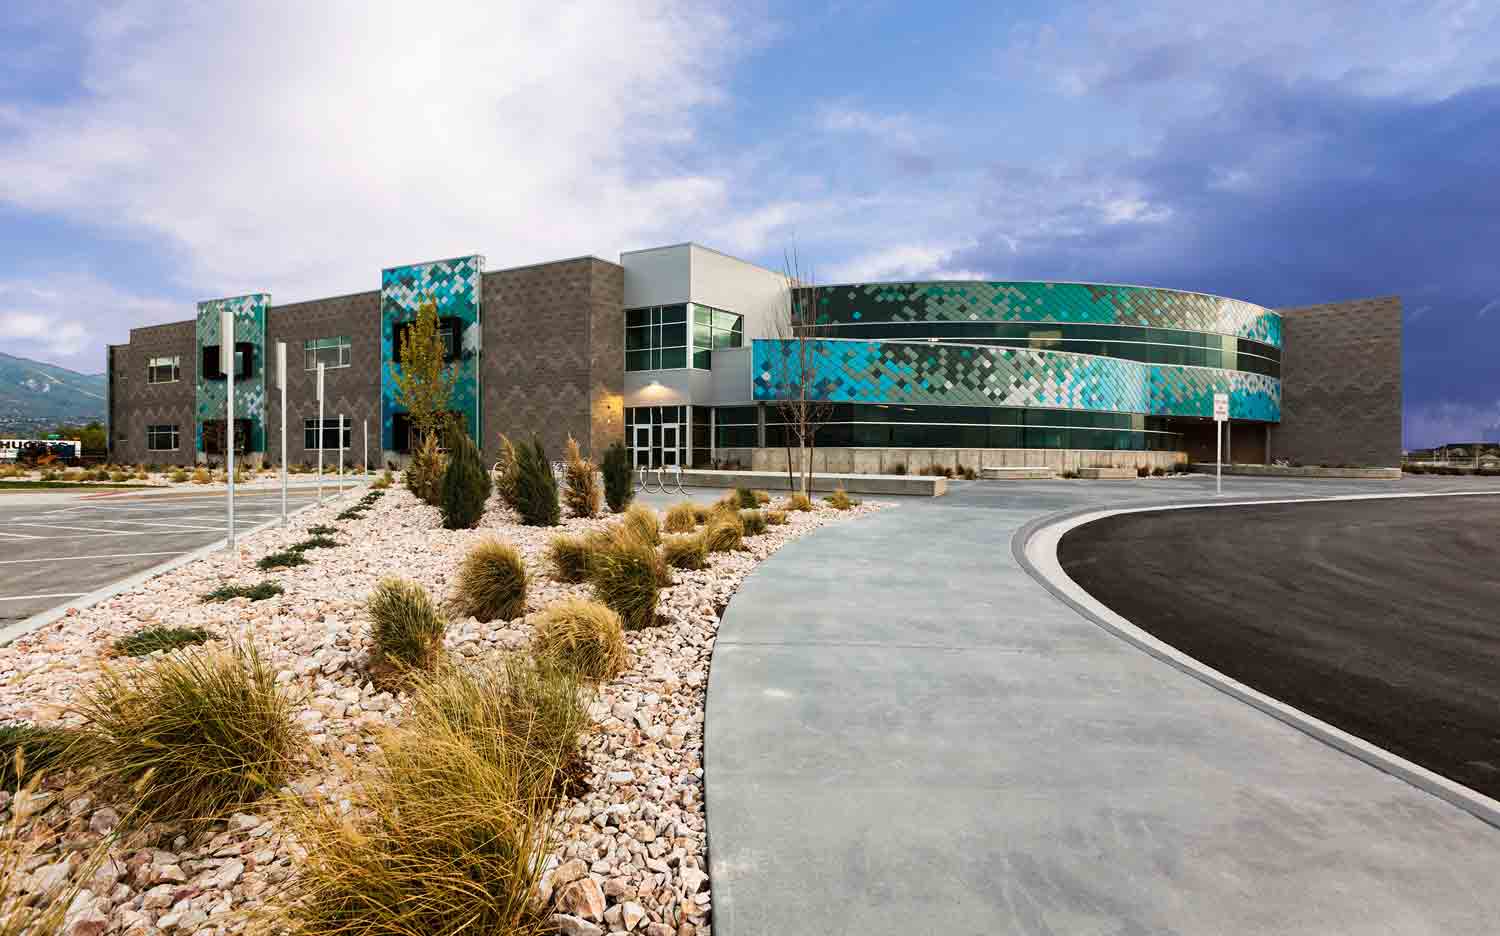 Odyssey Elementary School in Farmington, Utah